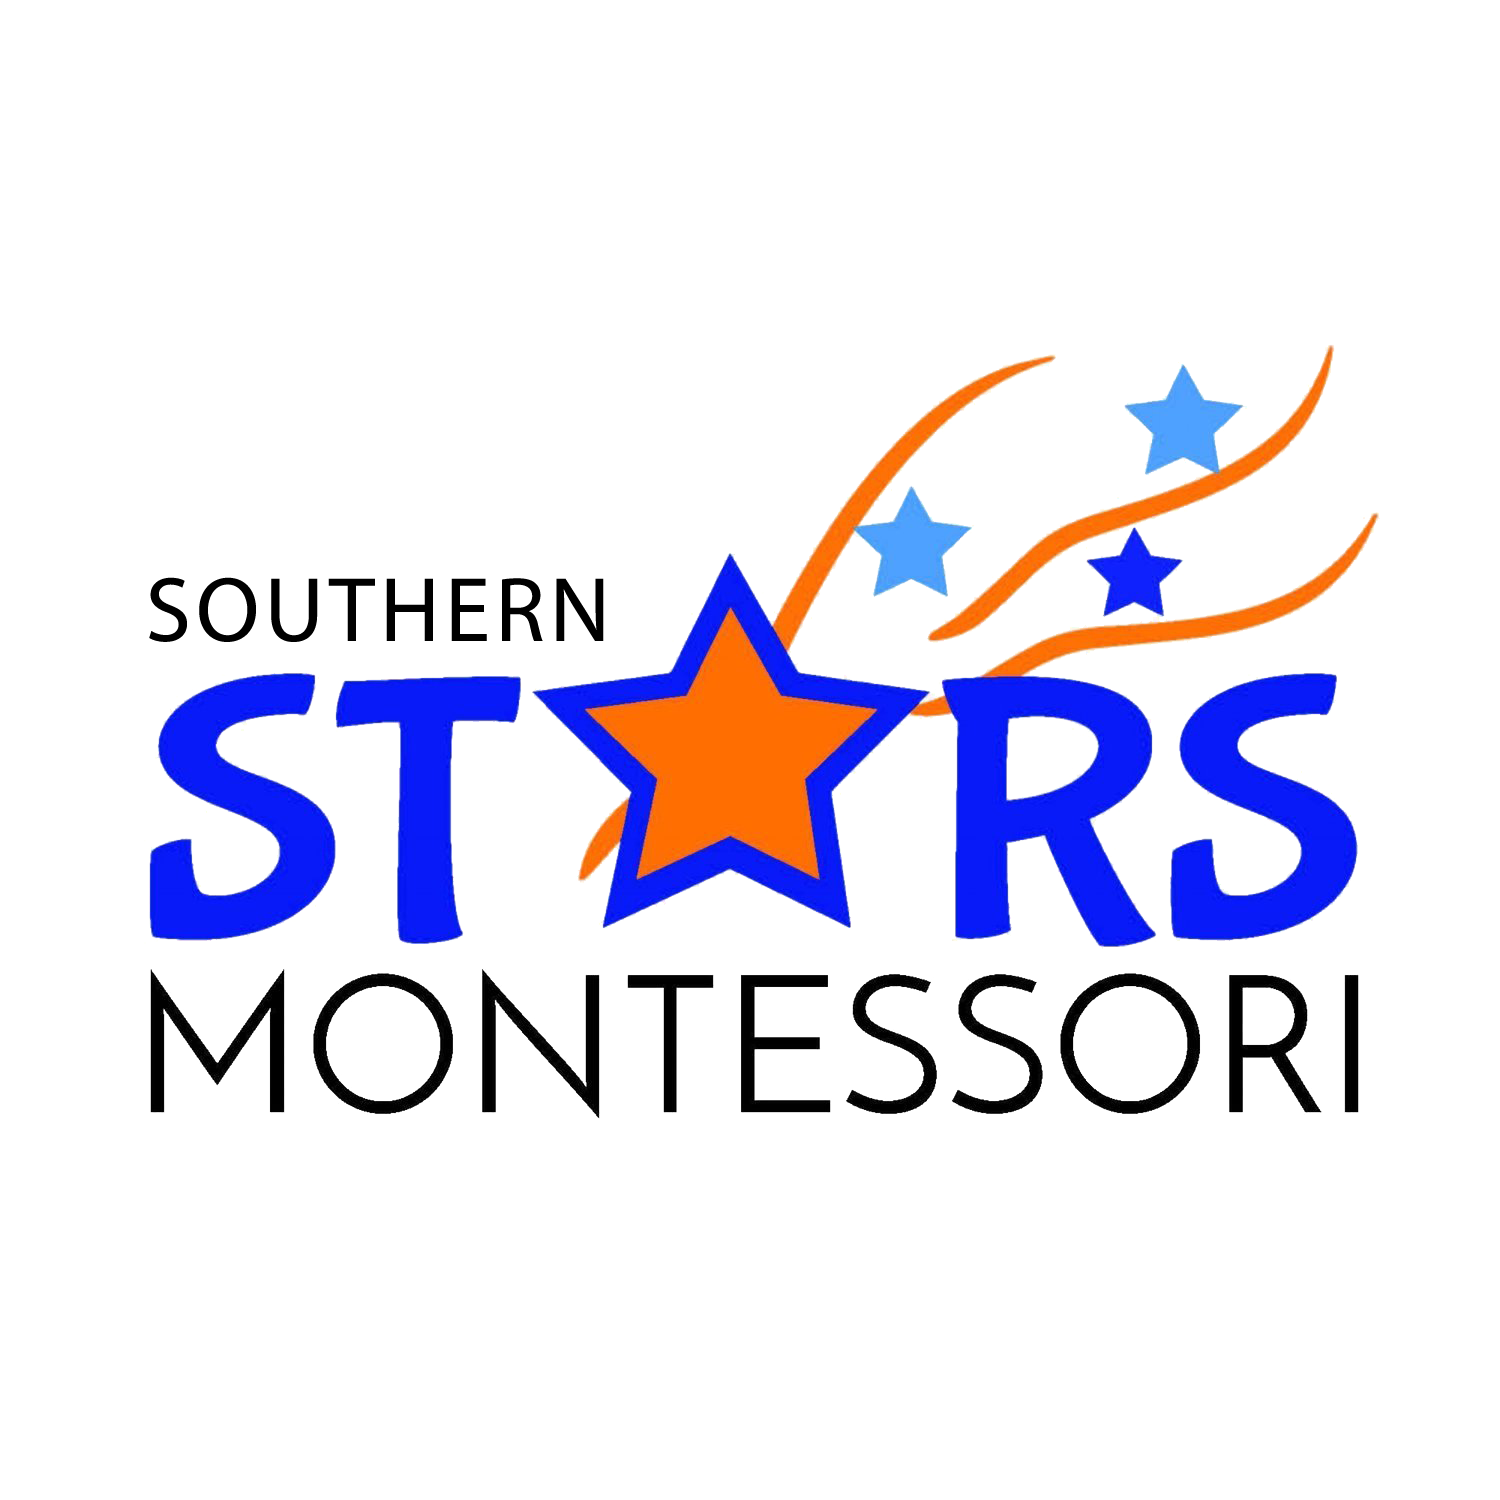 Southern Stars Montessori